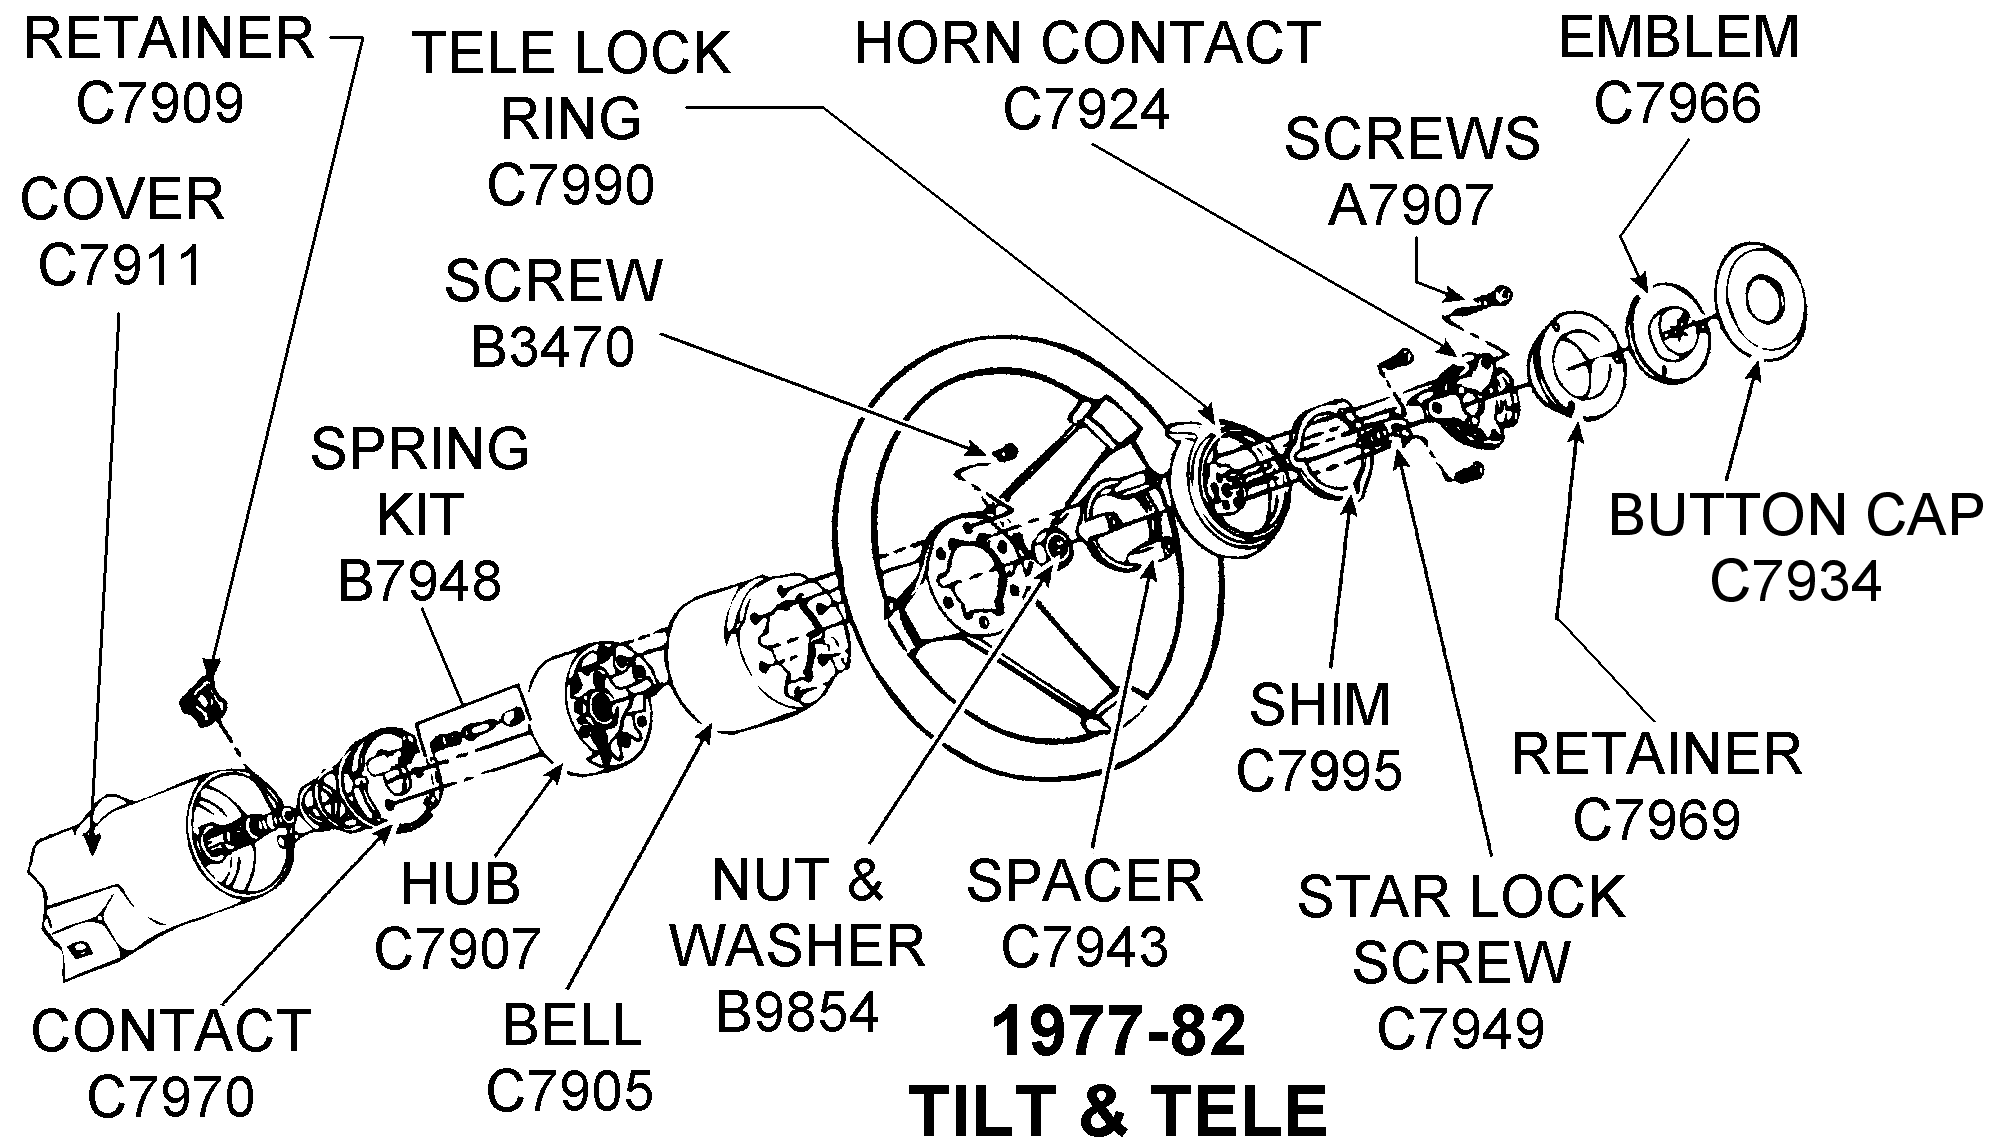 1977-82 Tilt and Tele - Diagram View - Chicago Corvette Supply